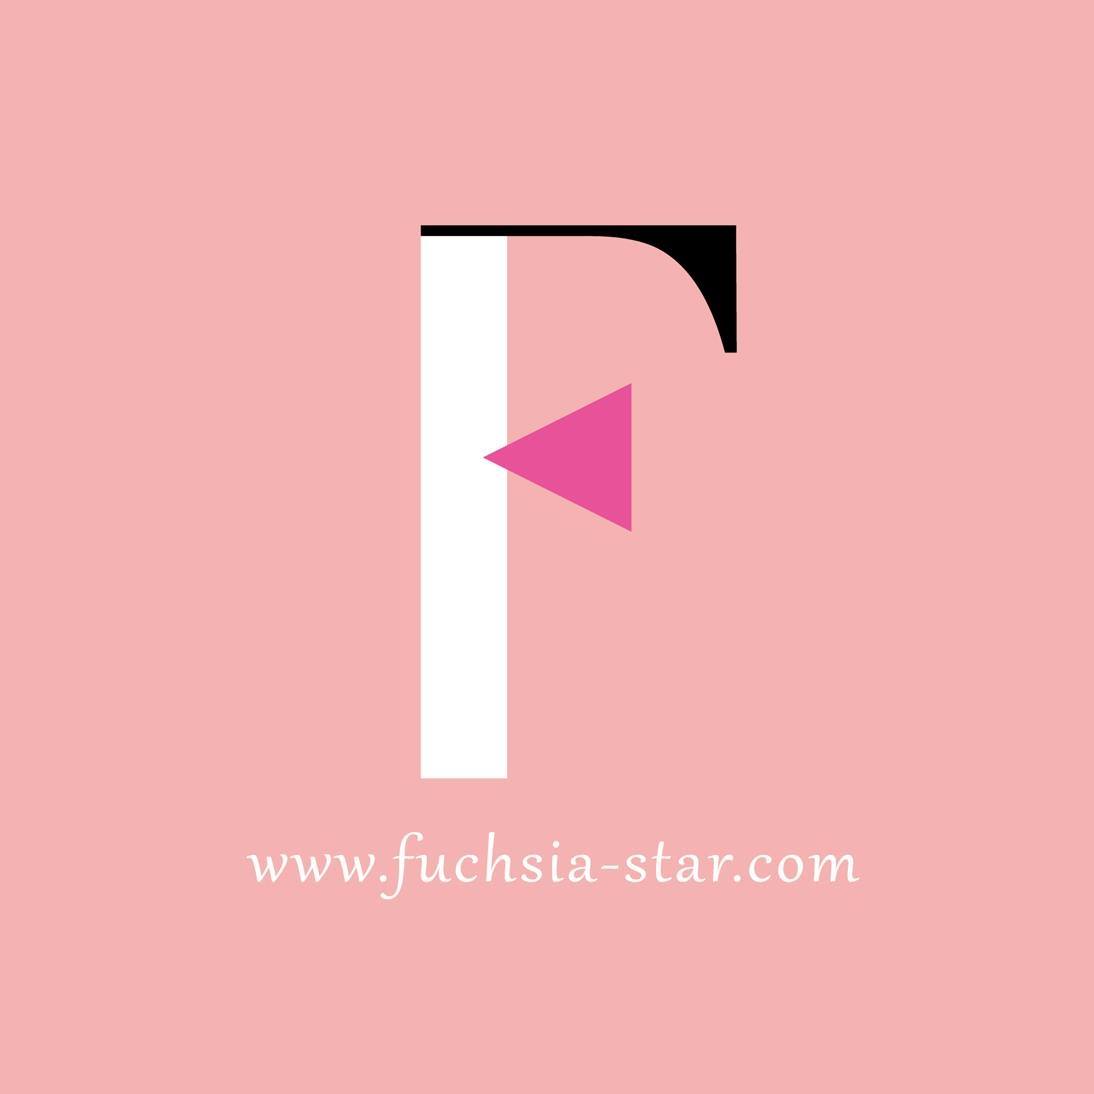 Fuchsia Agency